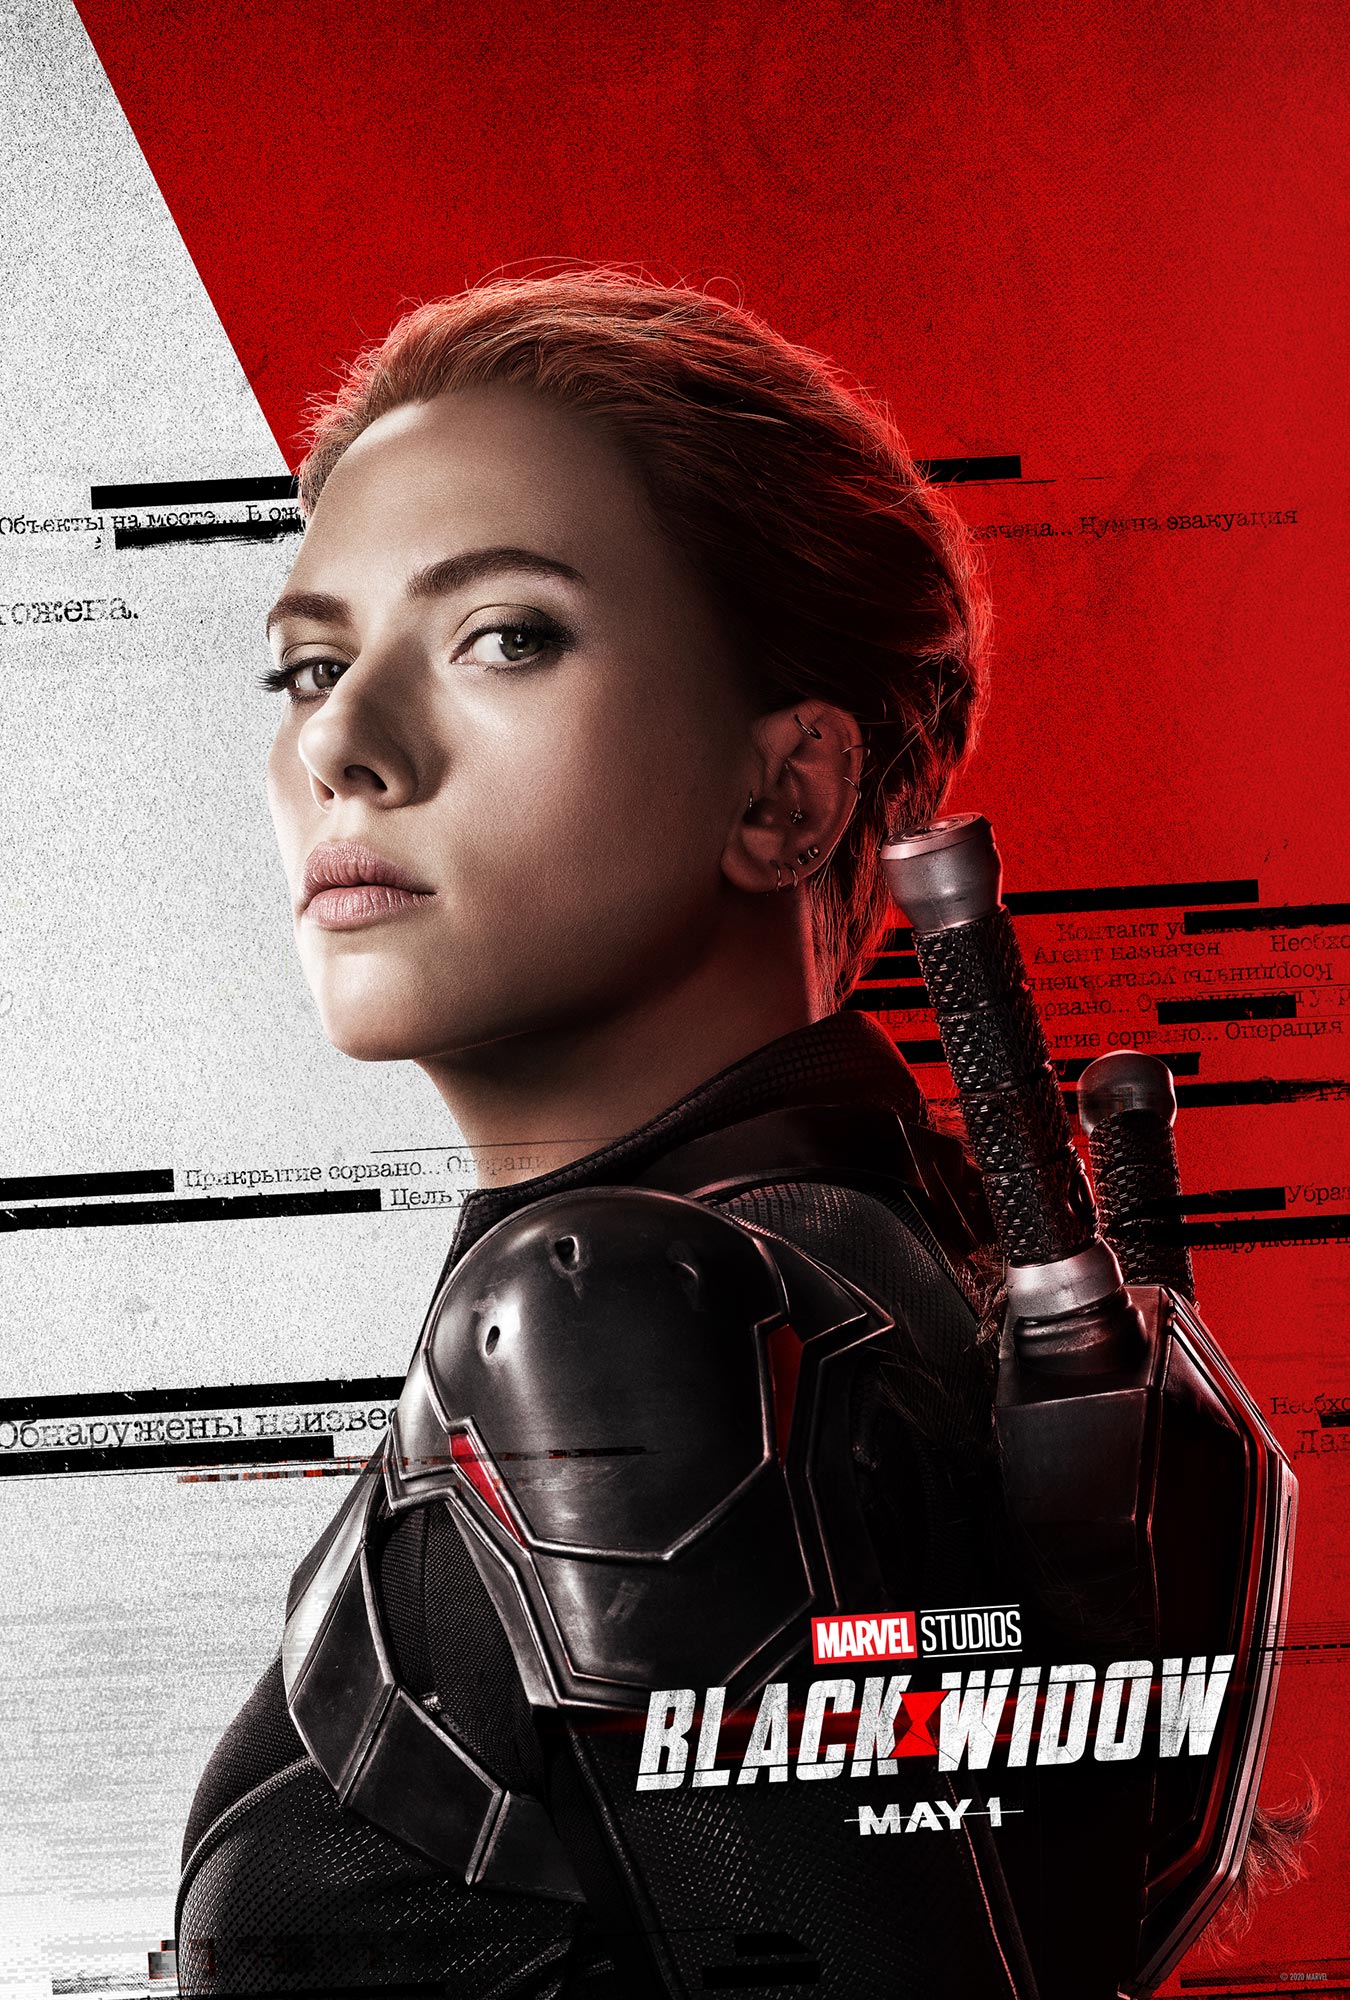 Marvel Studios' Black Widow - Superbowl Trailer